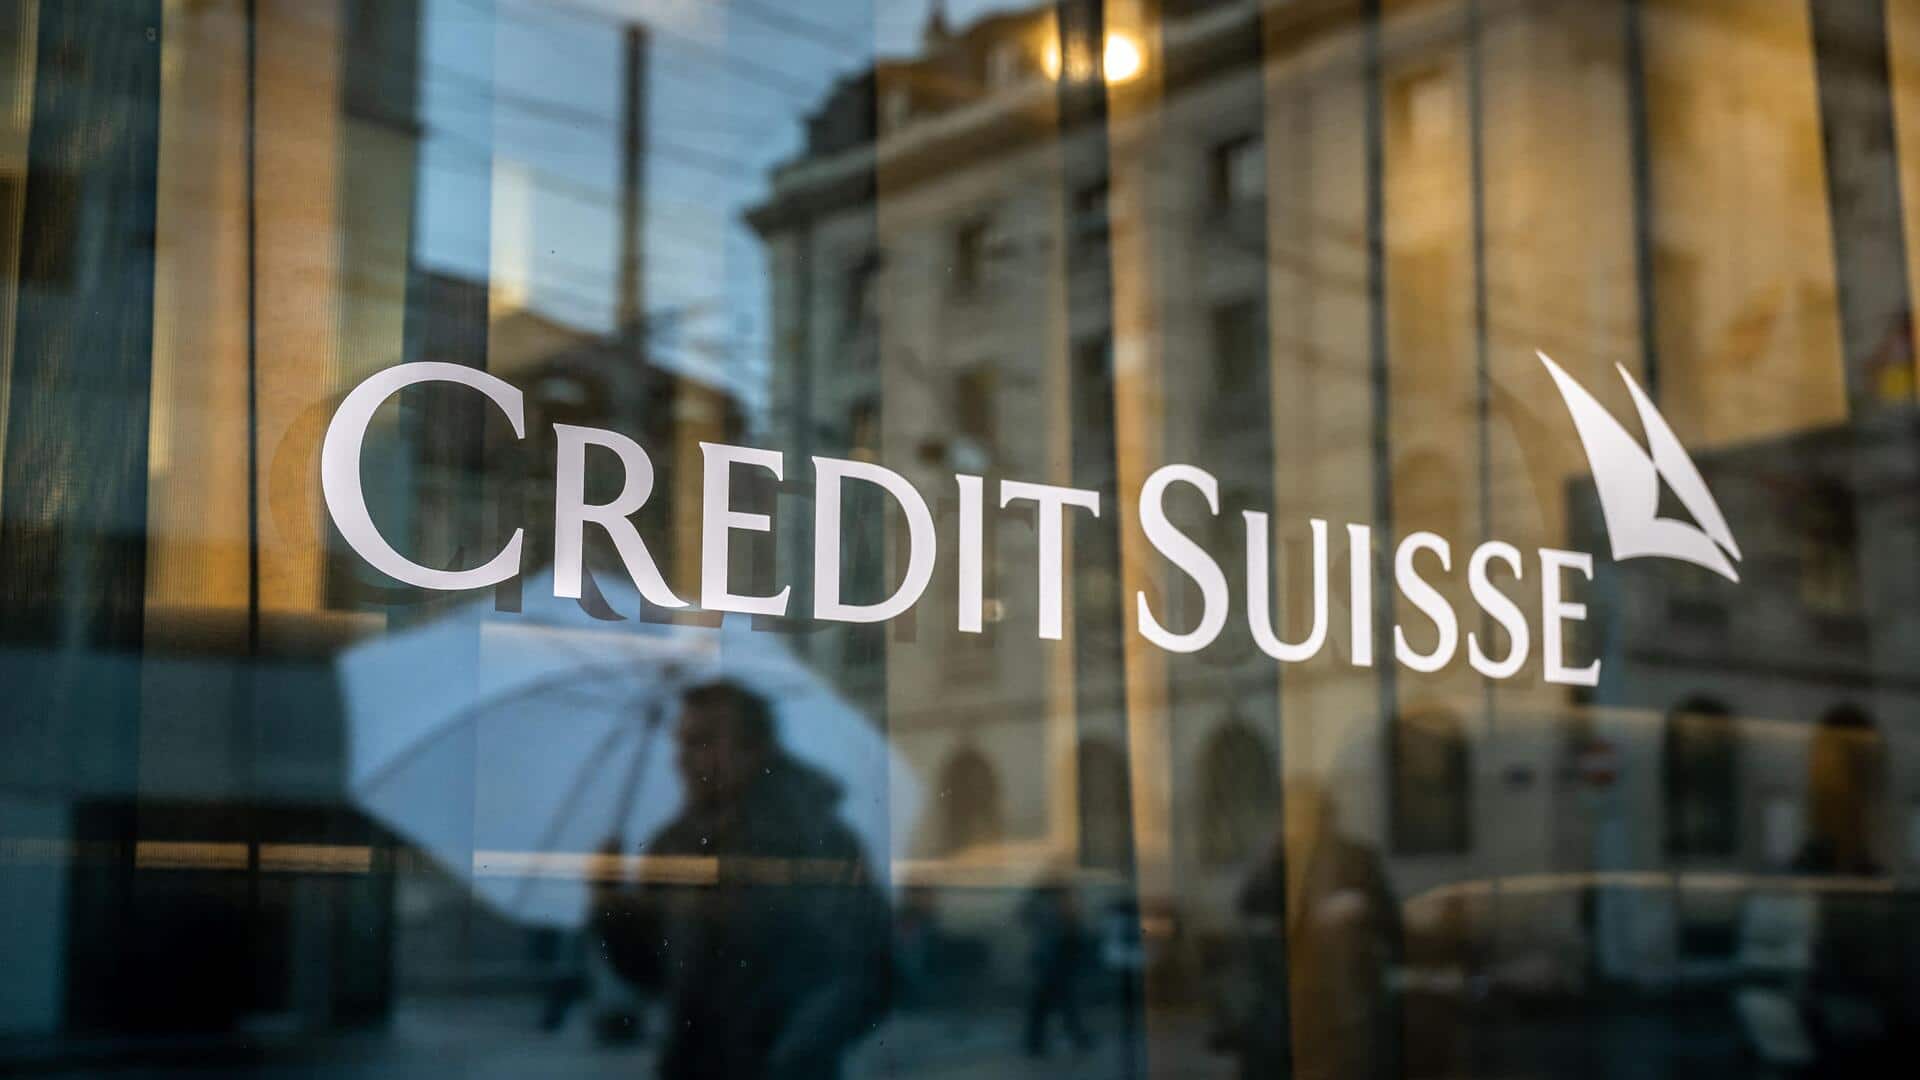 Credit Suisse to trim workforce by 10% soon: Report